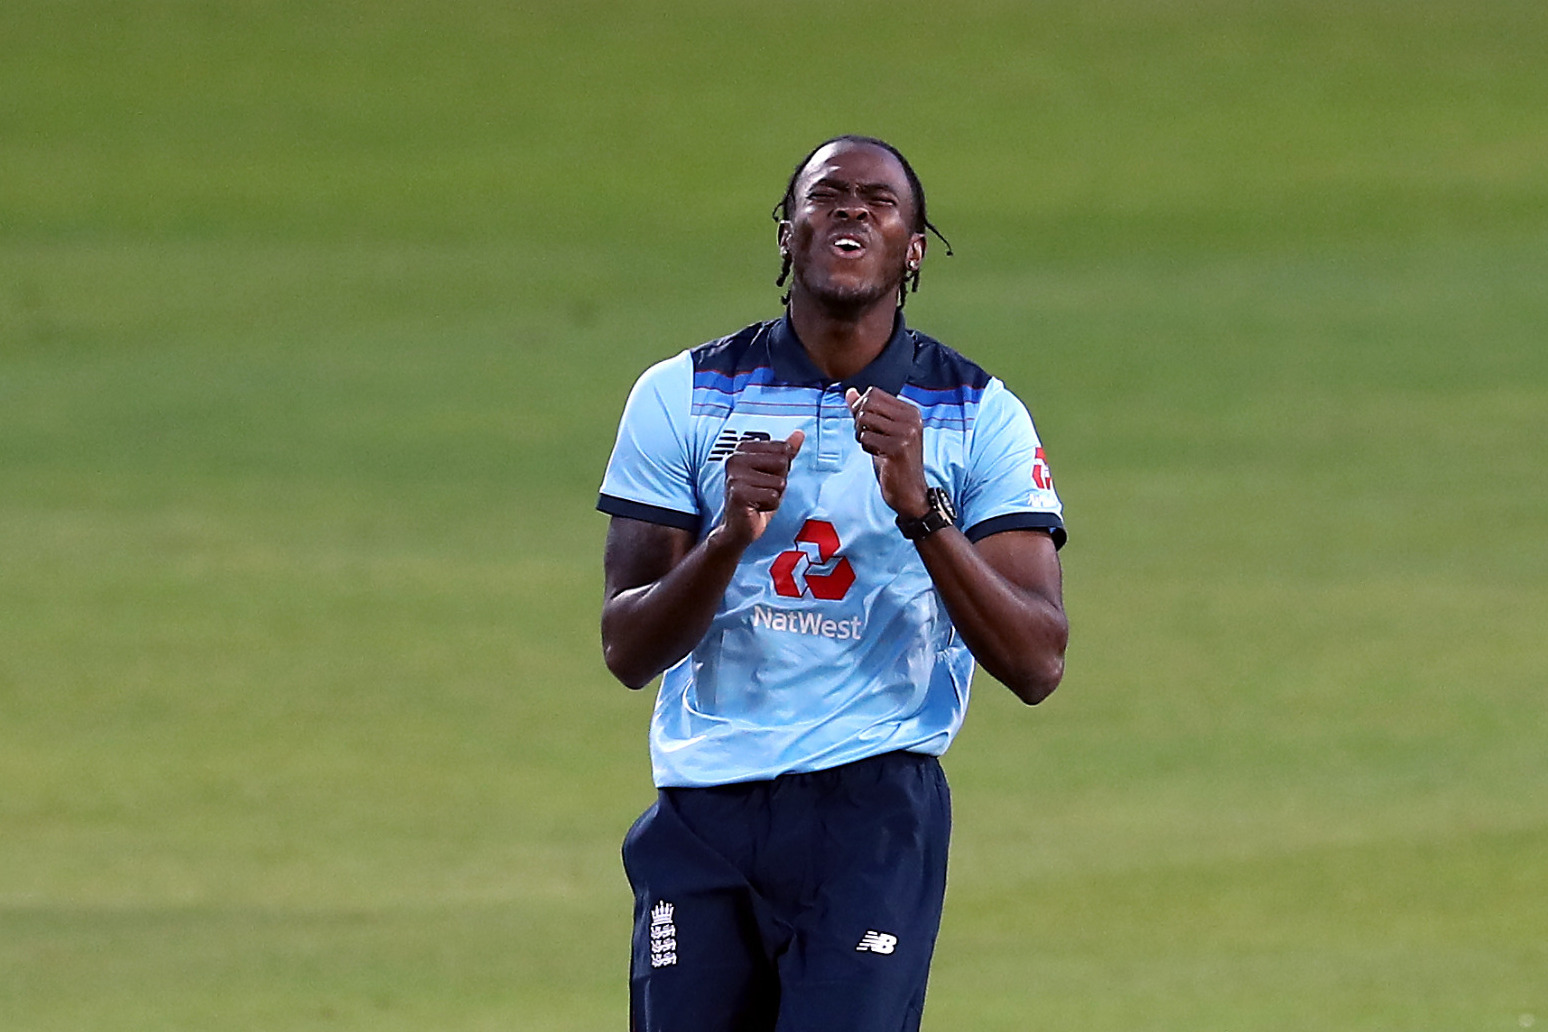 Jofra Archer returns career-best ODI figures as England claim consolation win 